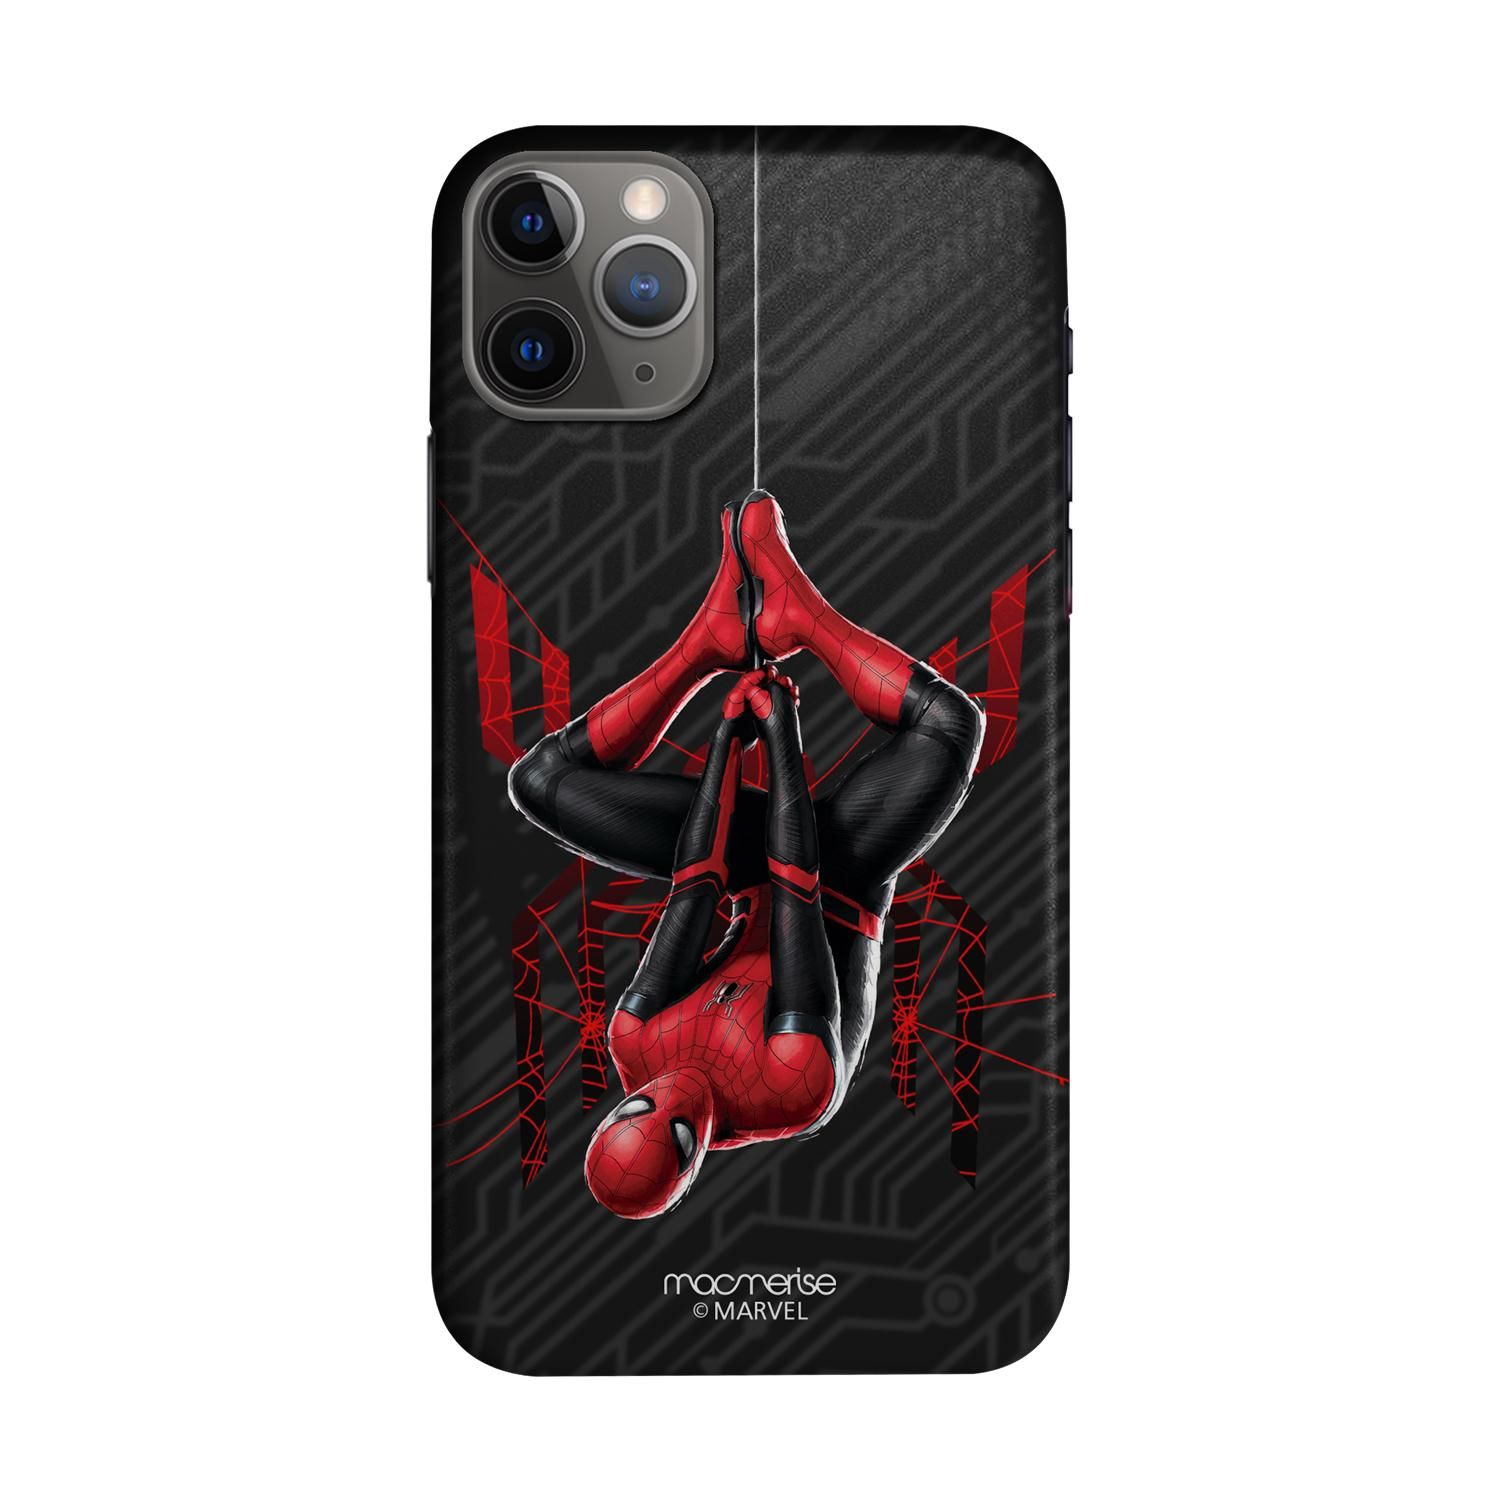 Spiderman Tingle - Sleek Phone Case for iPhone 11 Pro Max